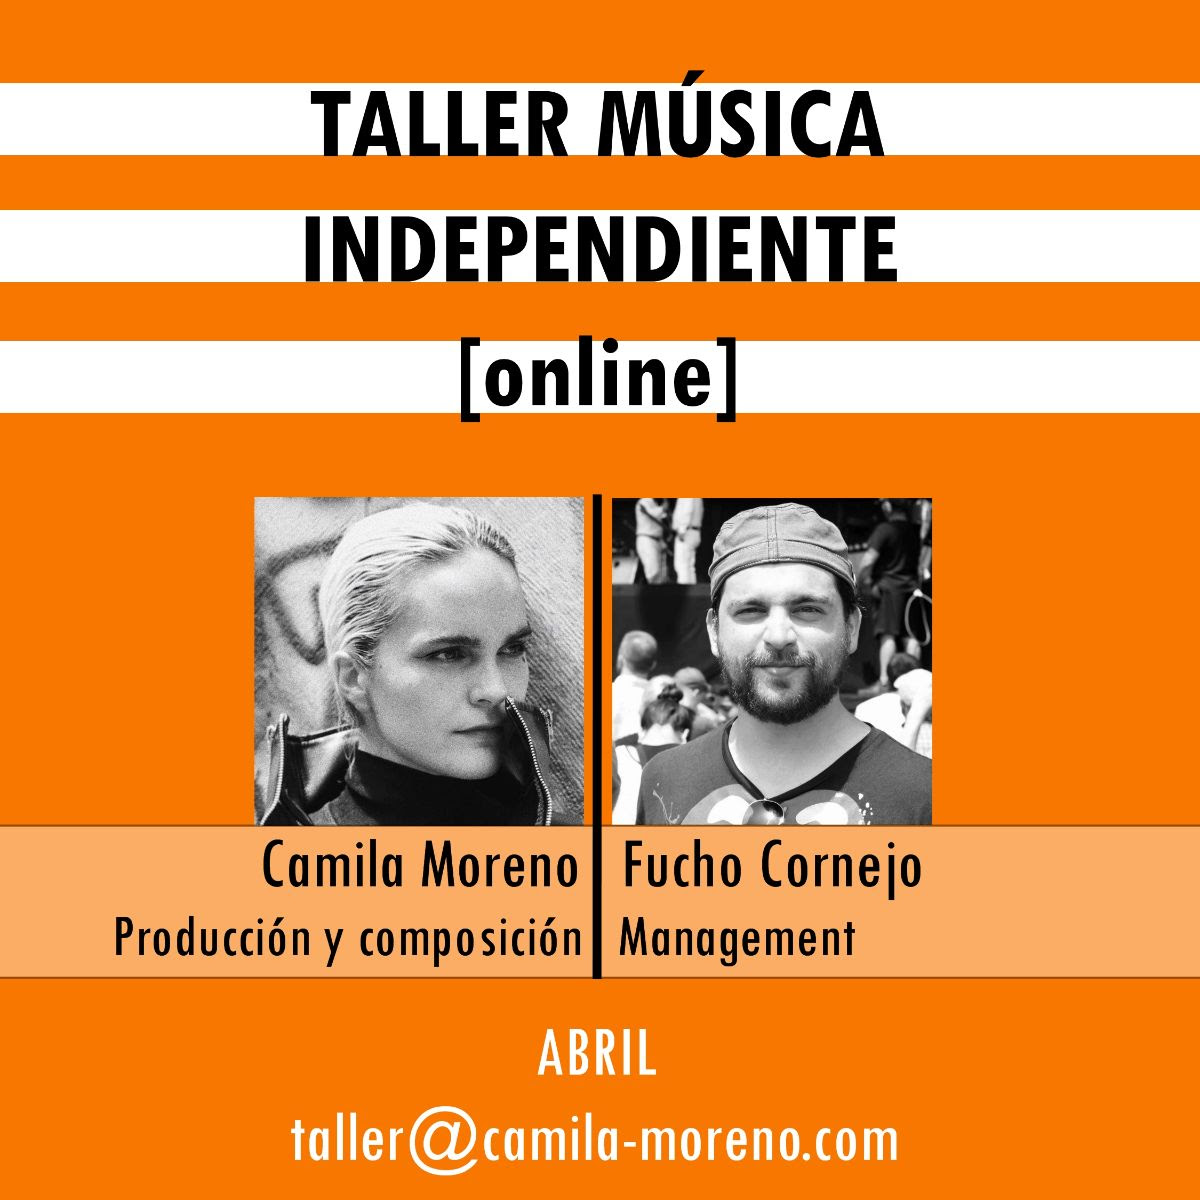 Camila Moreno Taller De Música Independiente